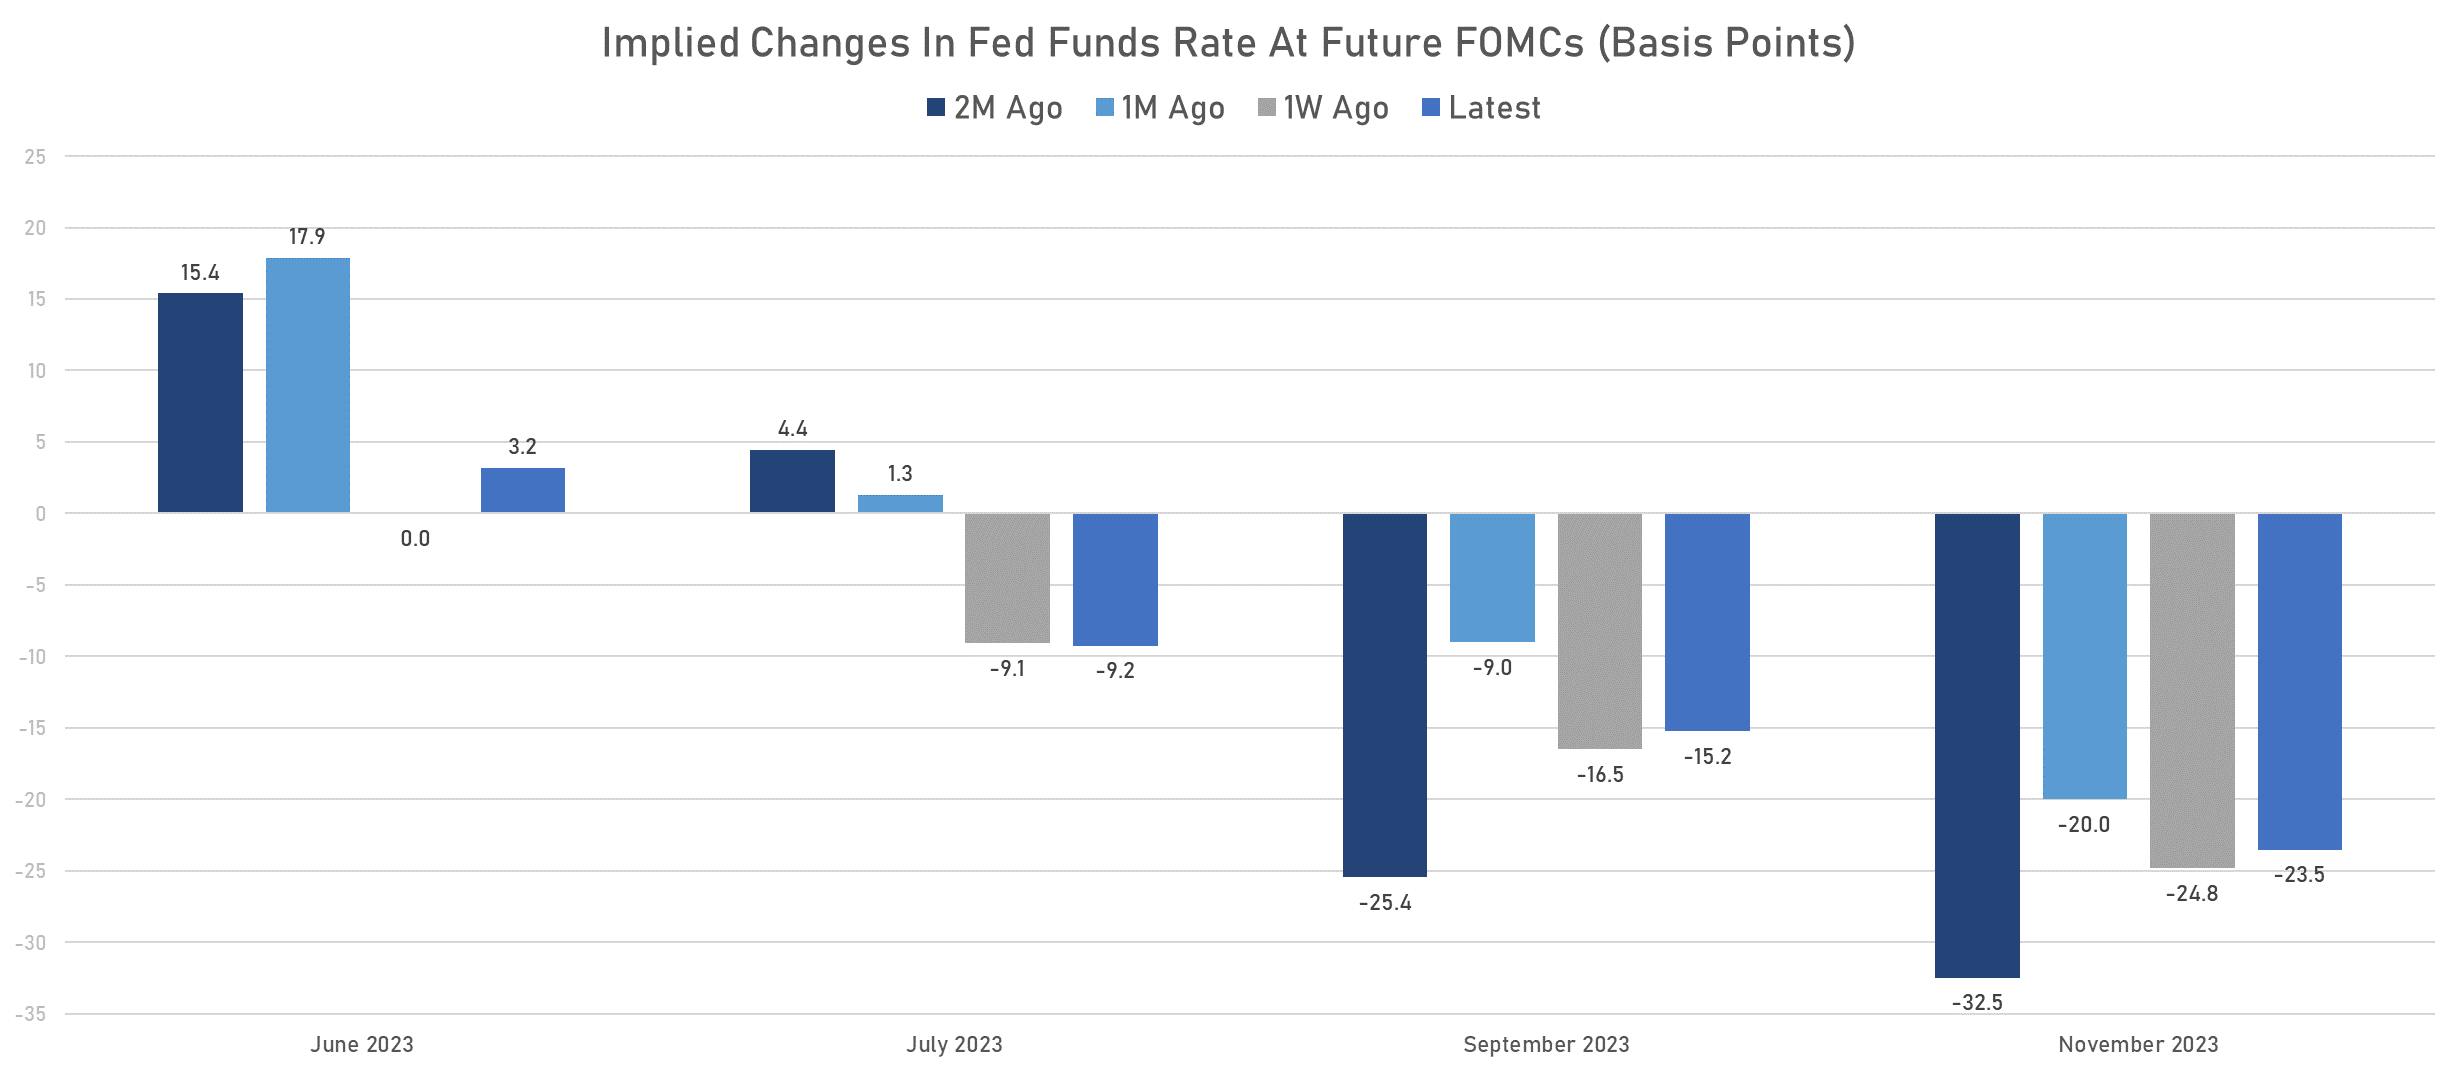 Pricing of the next FOMCs | Sources: phipost.com, Refinitiv data